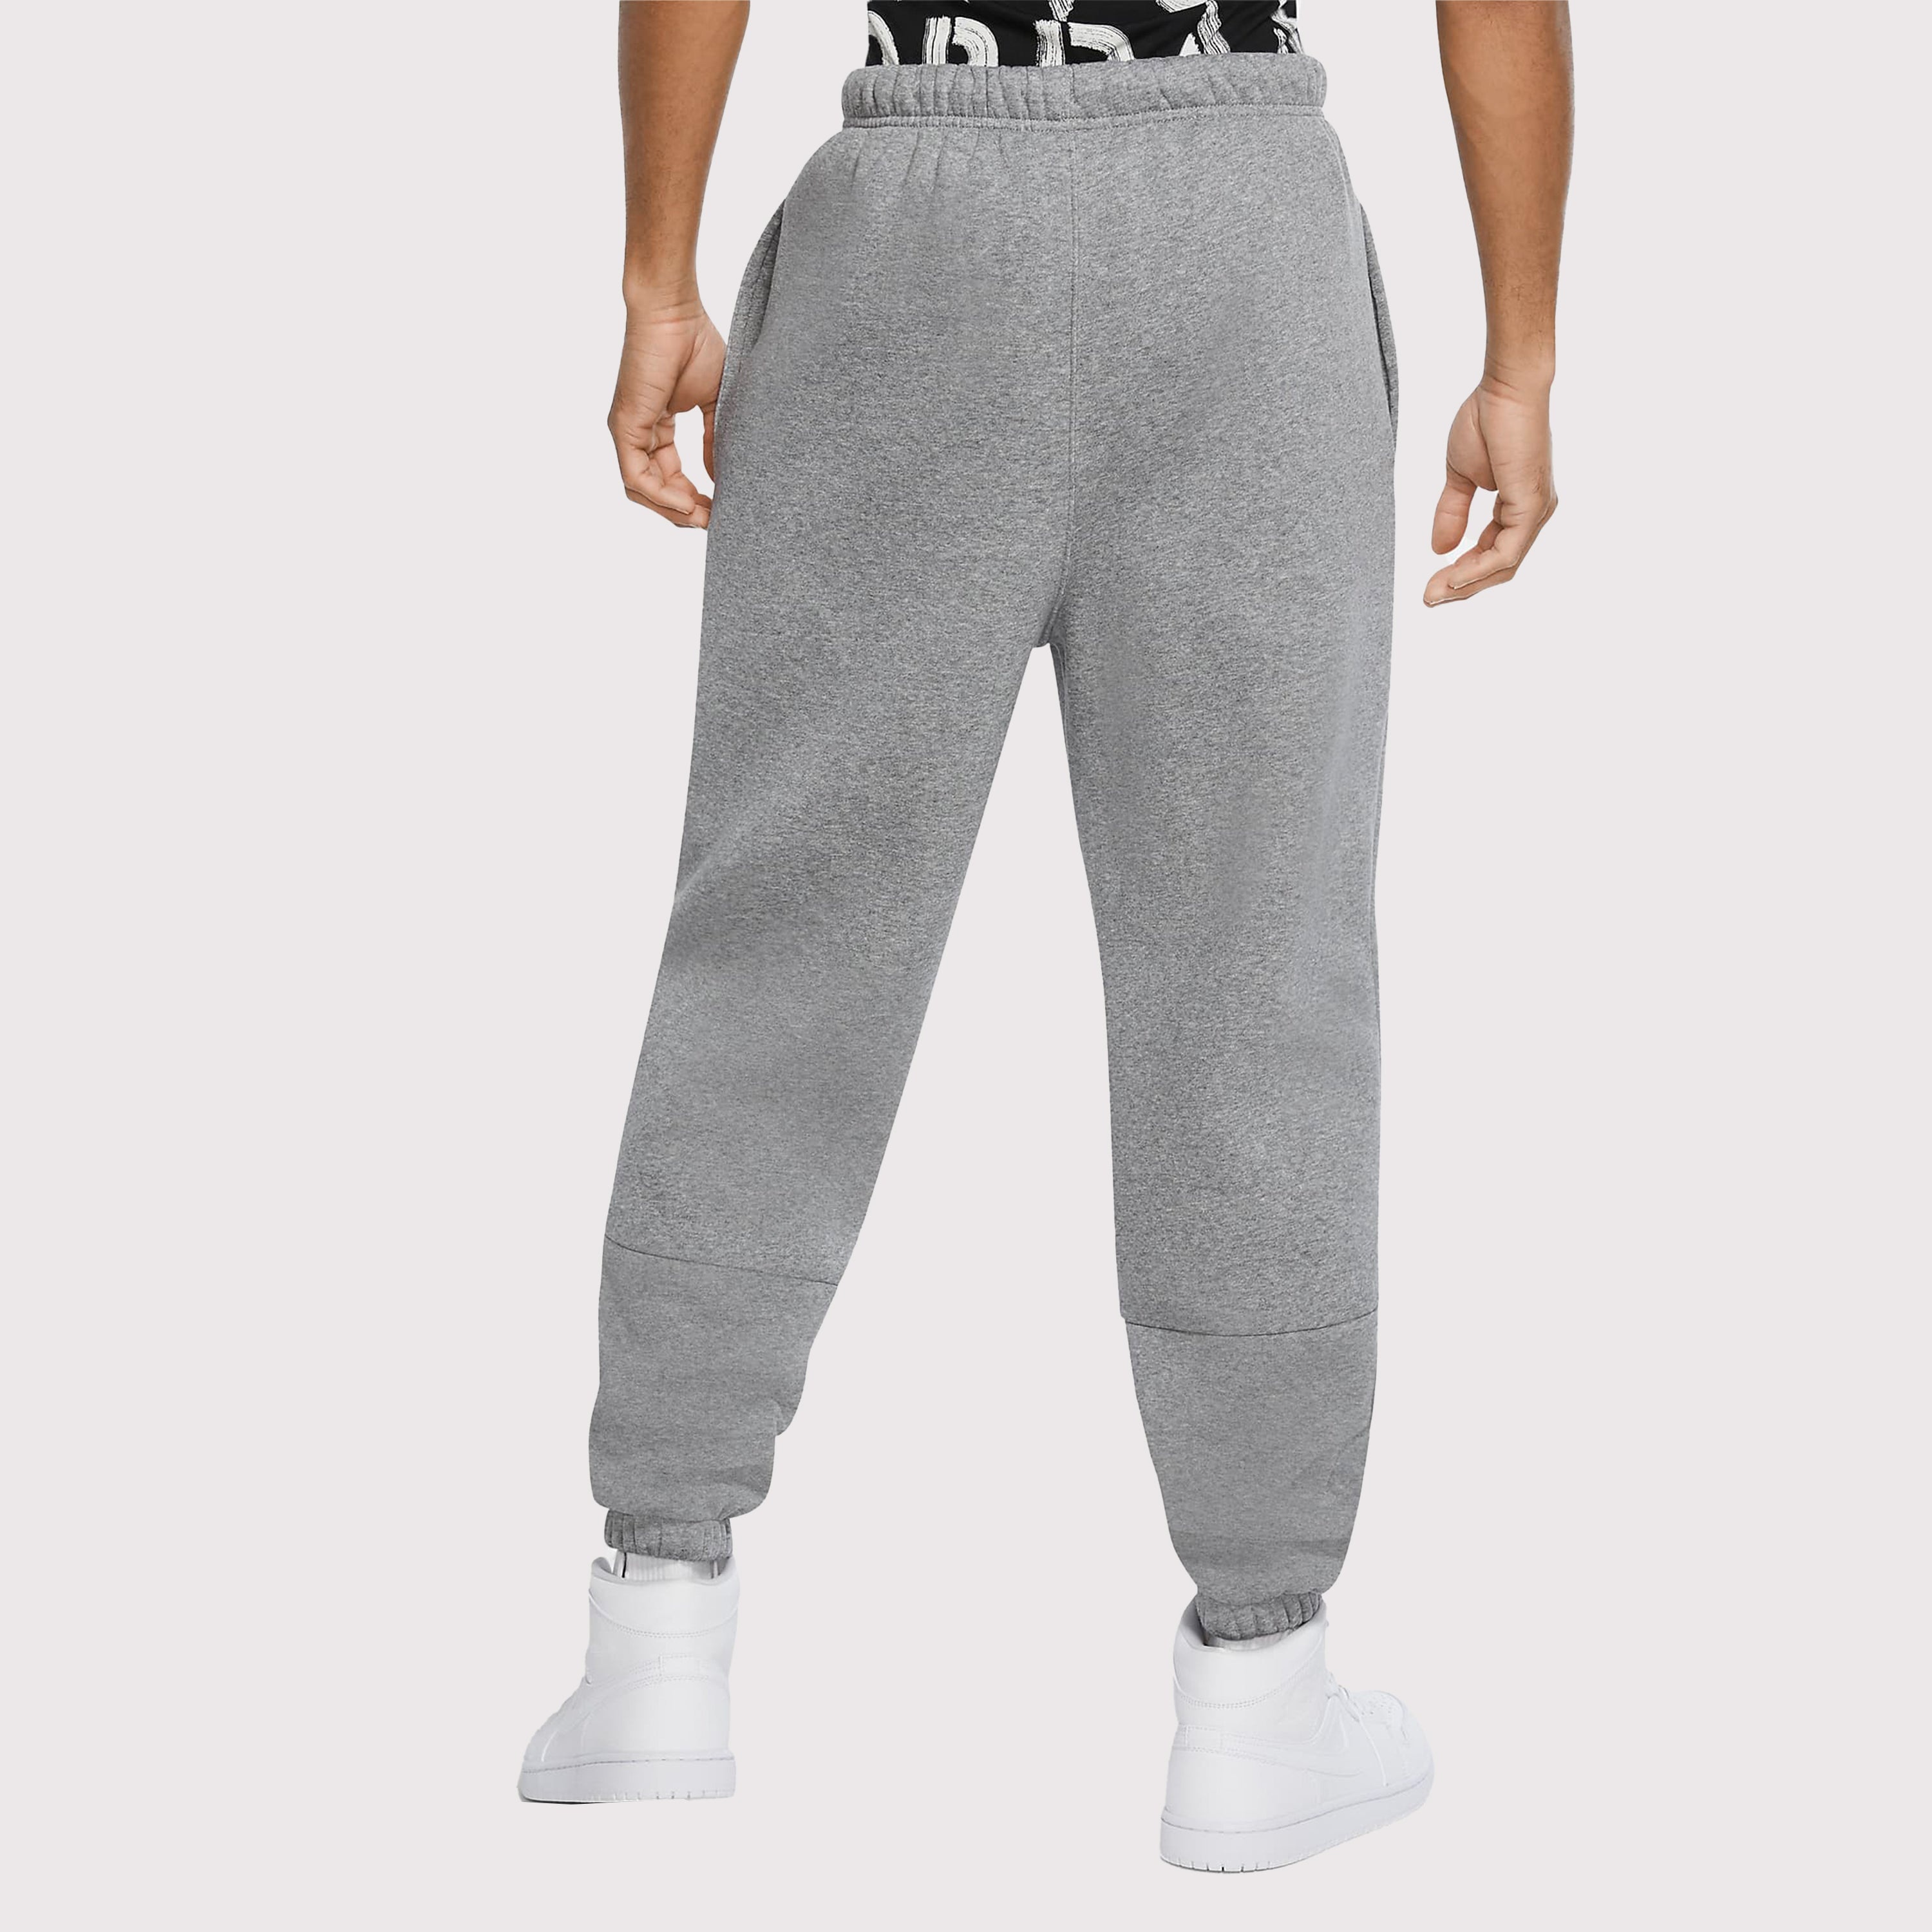 Air Jordan Casual Fleece Pants Men Grey CK6694-091 - 5